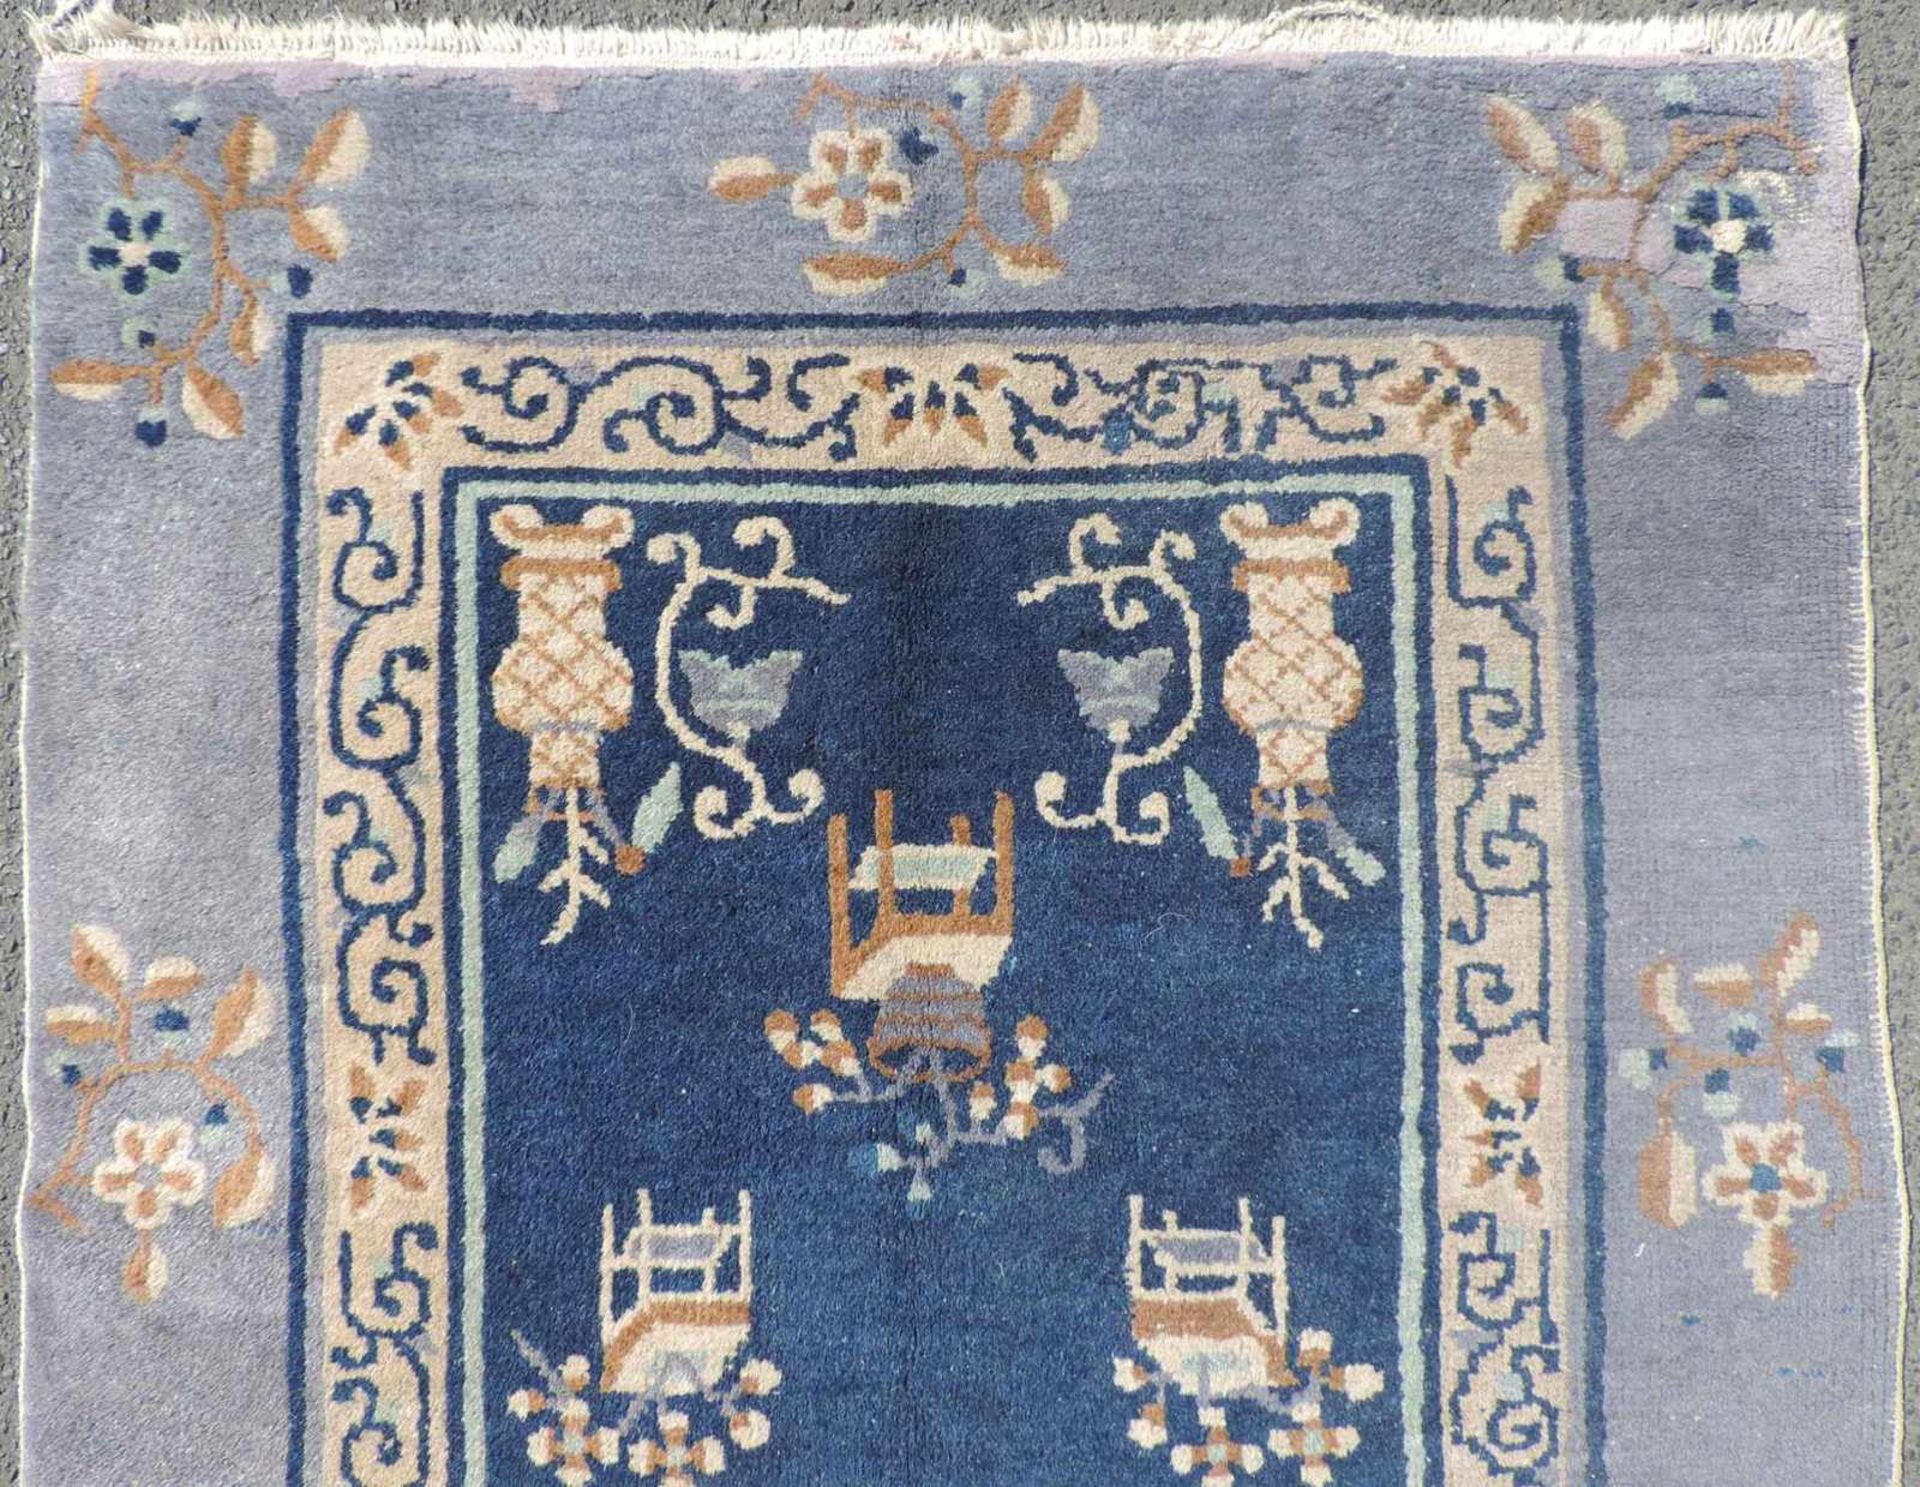 Pau Tou Teppich China, antik, Ende 19. Jahrhundert. 180 cm x 93 cm. Handgeknüpft. Wolle auf - Bild 4 aus 7